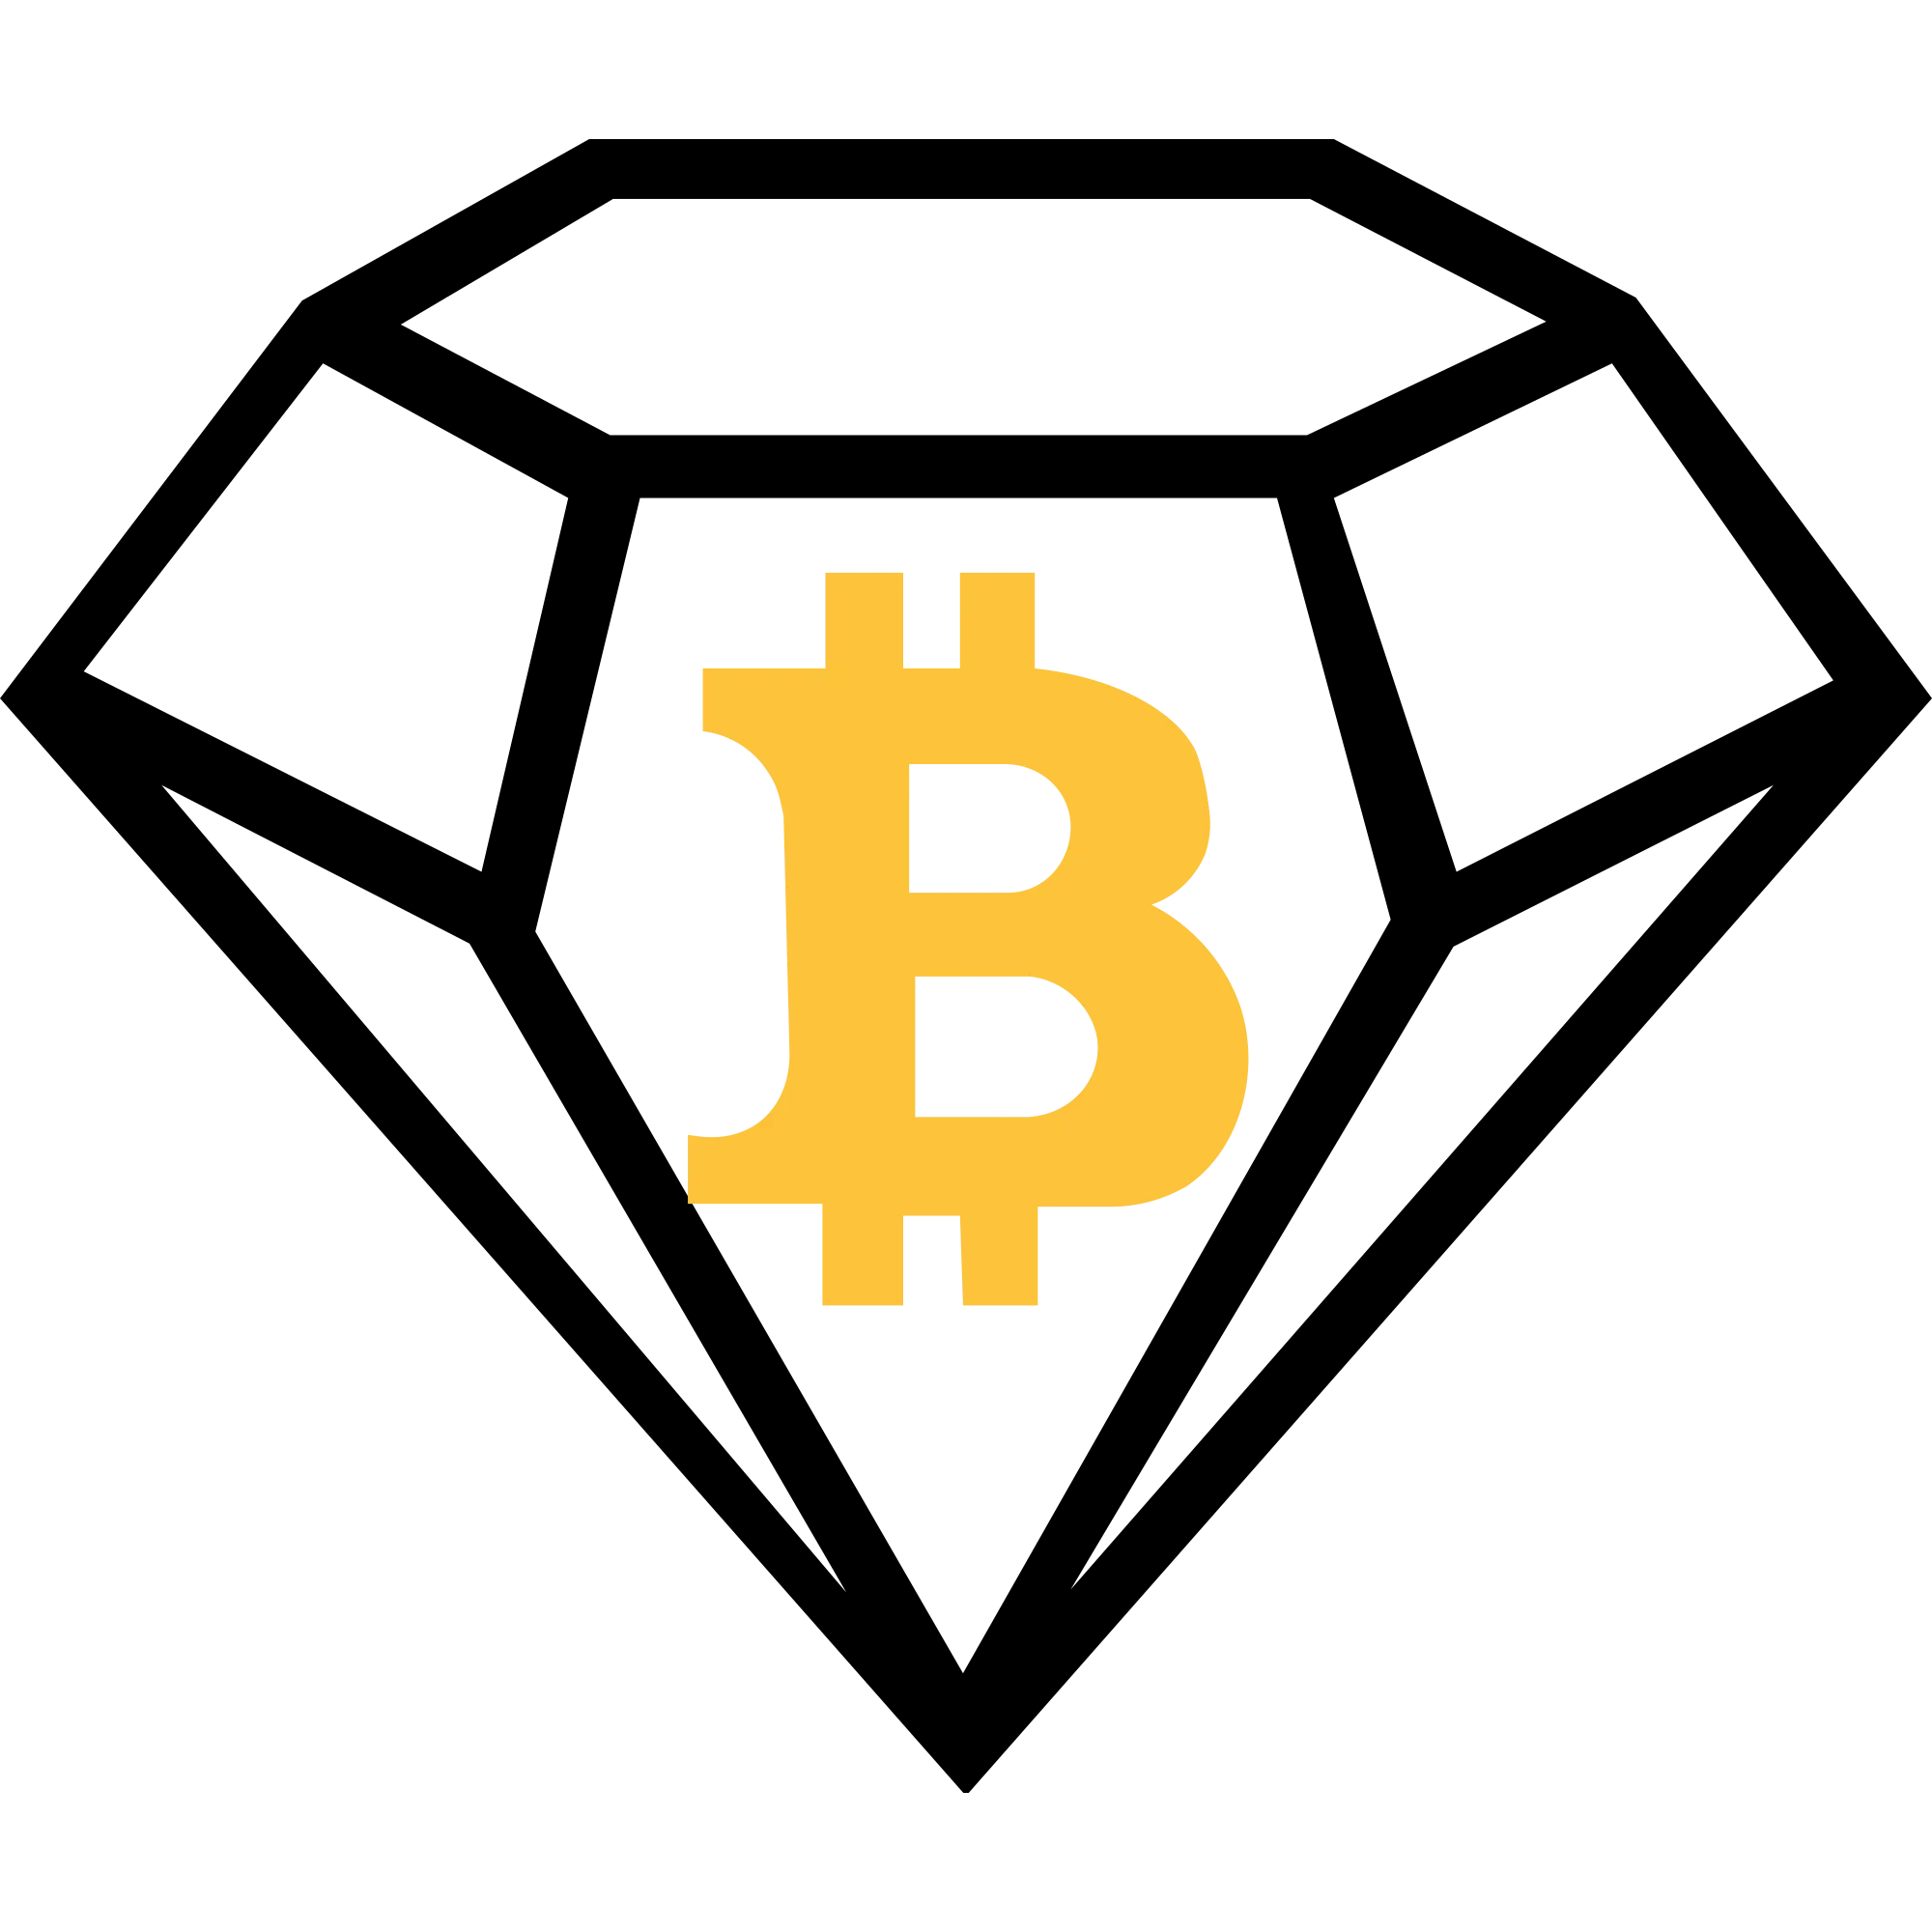 Bitcoin Diamond (BCD) logo